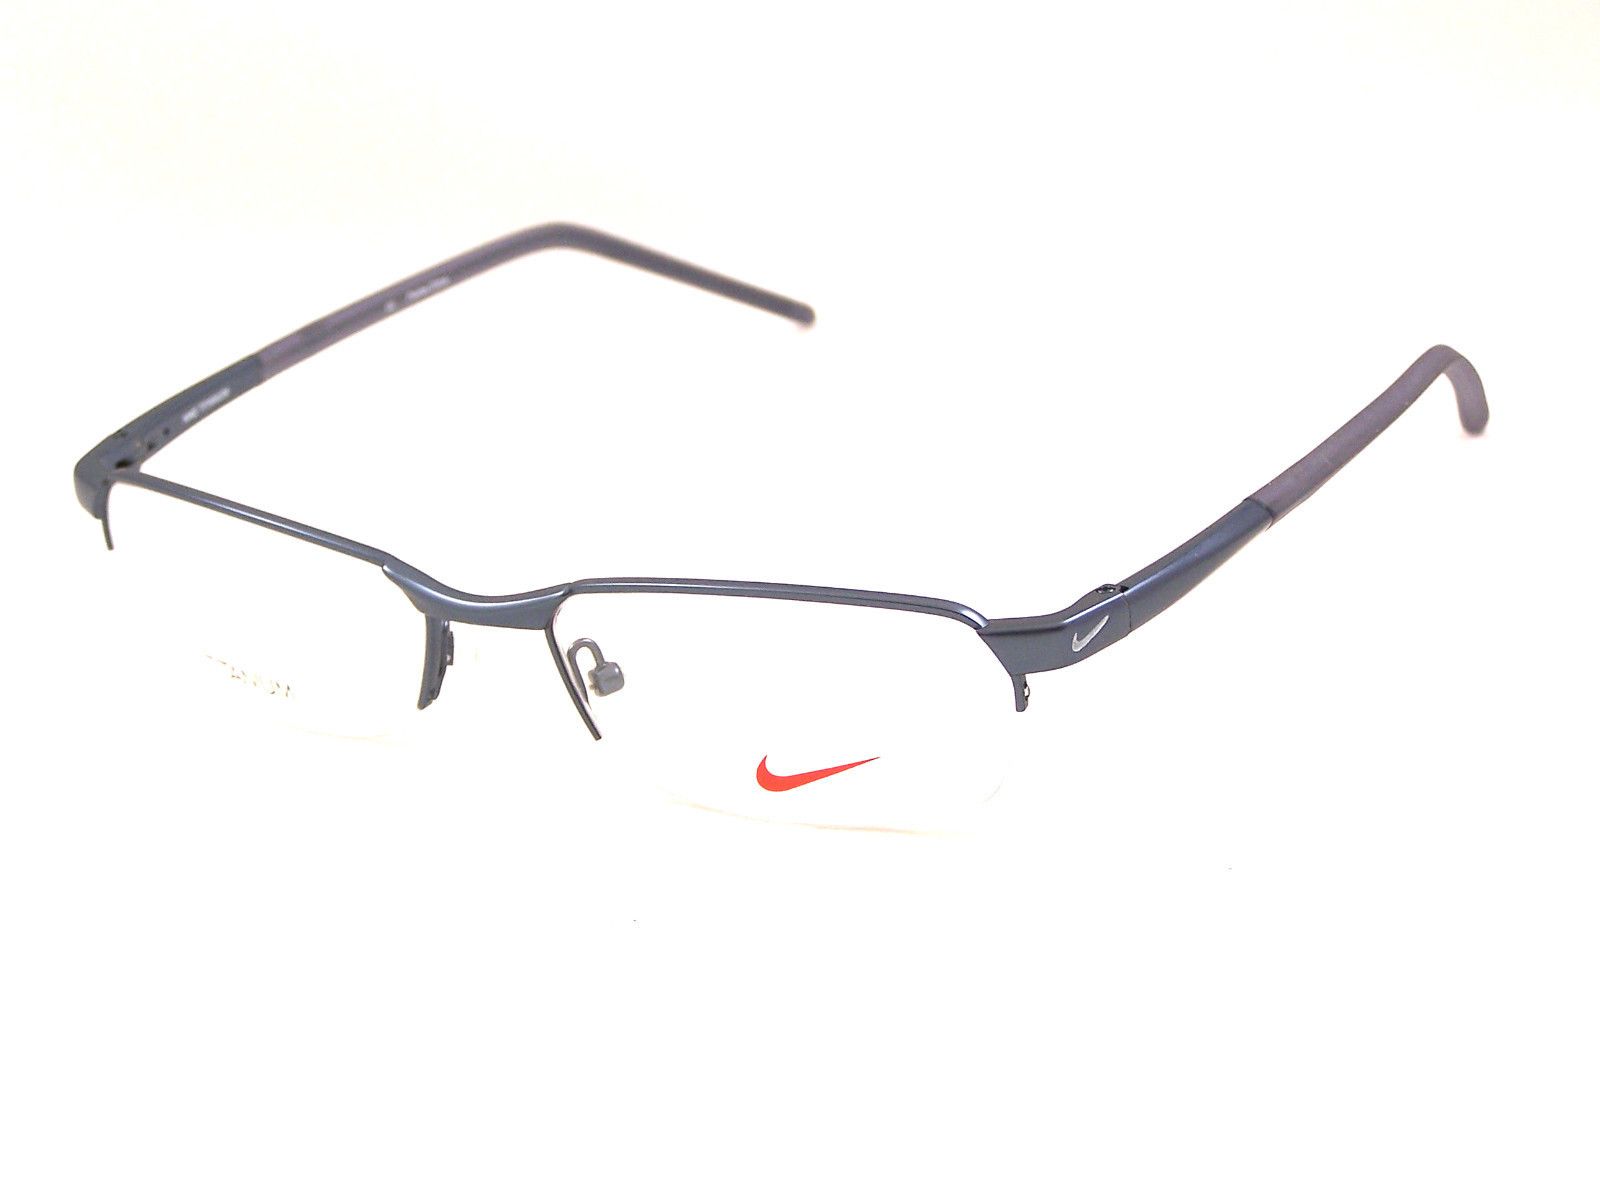  6021 RX Glasses Brushed Blue Titanium Frames Clear Lenses ★